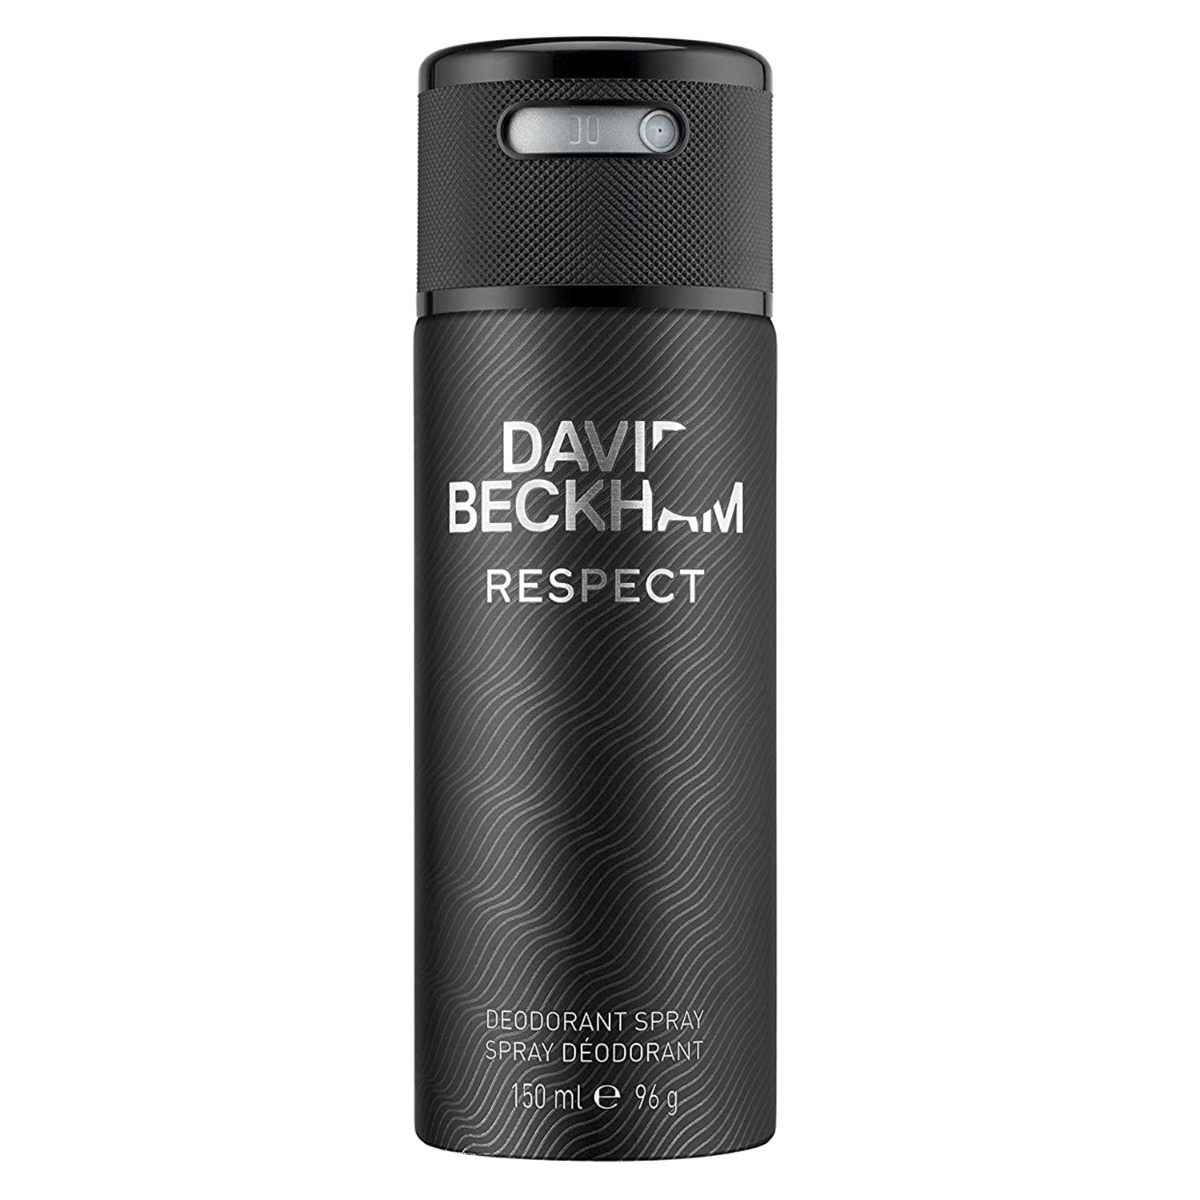 David Beckham Respect Deodorant Spray For Men, 150ml